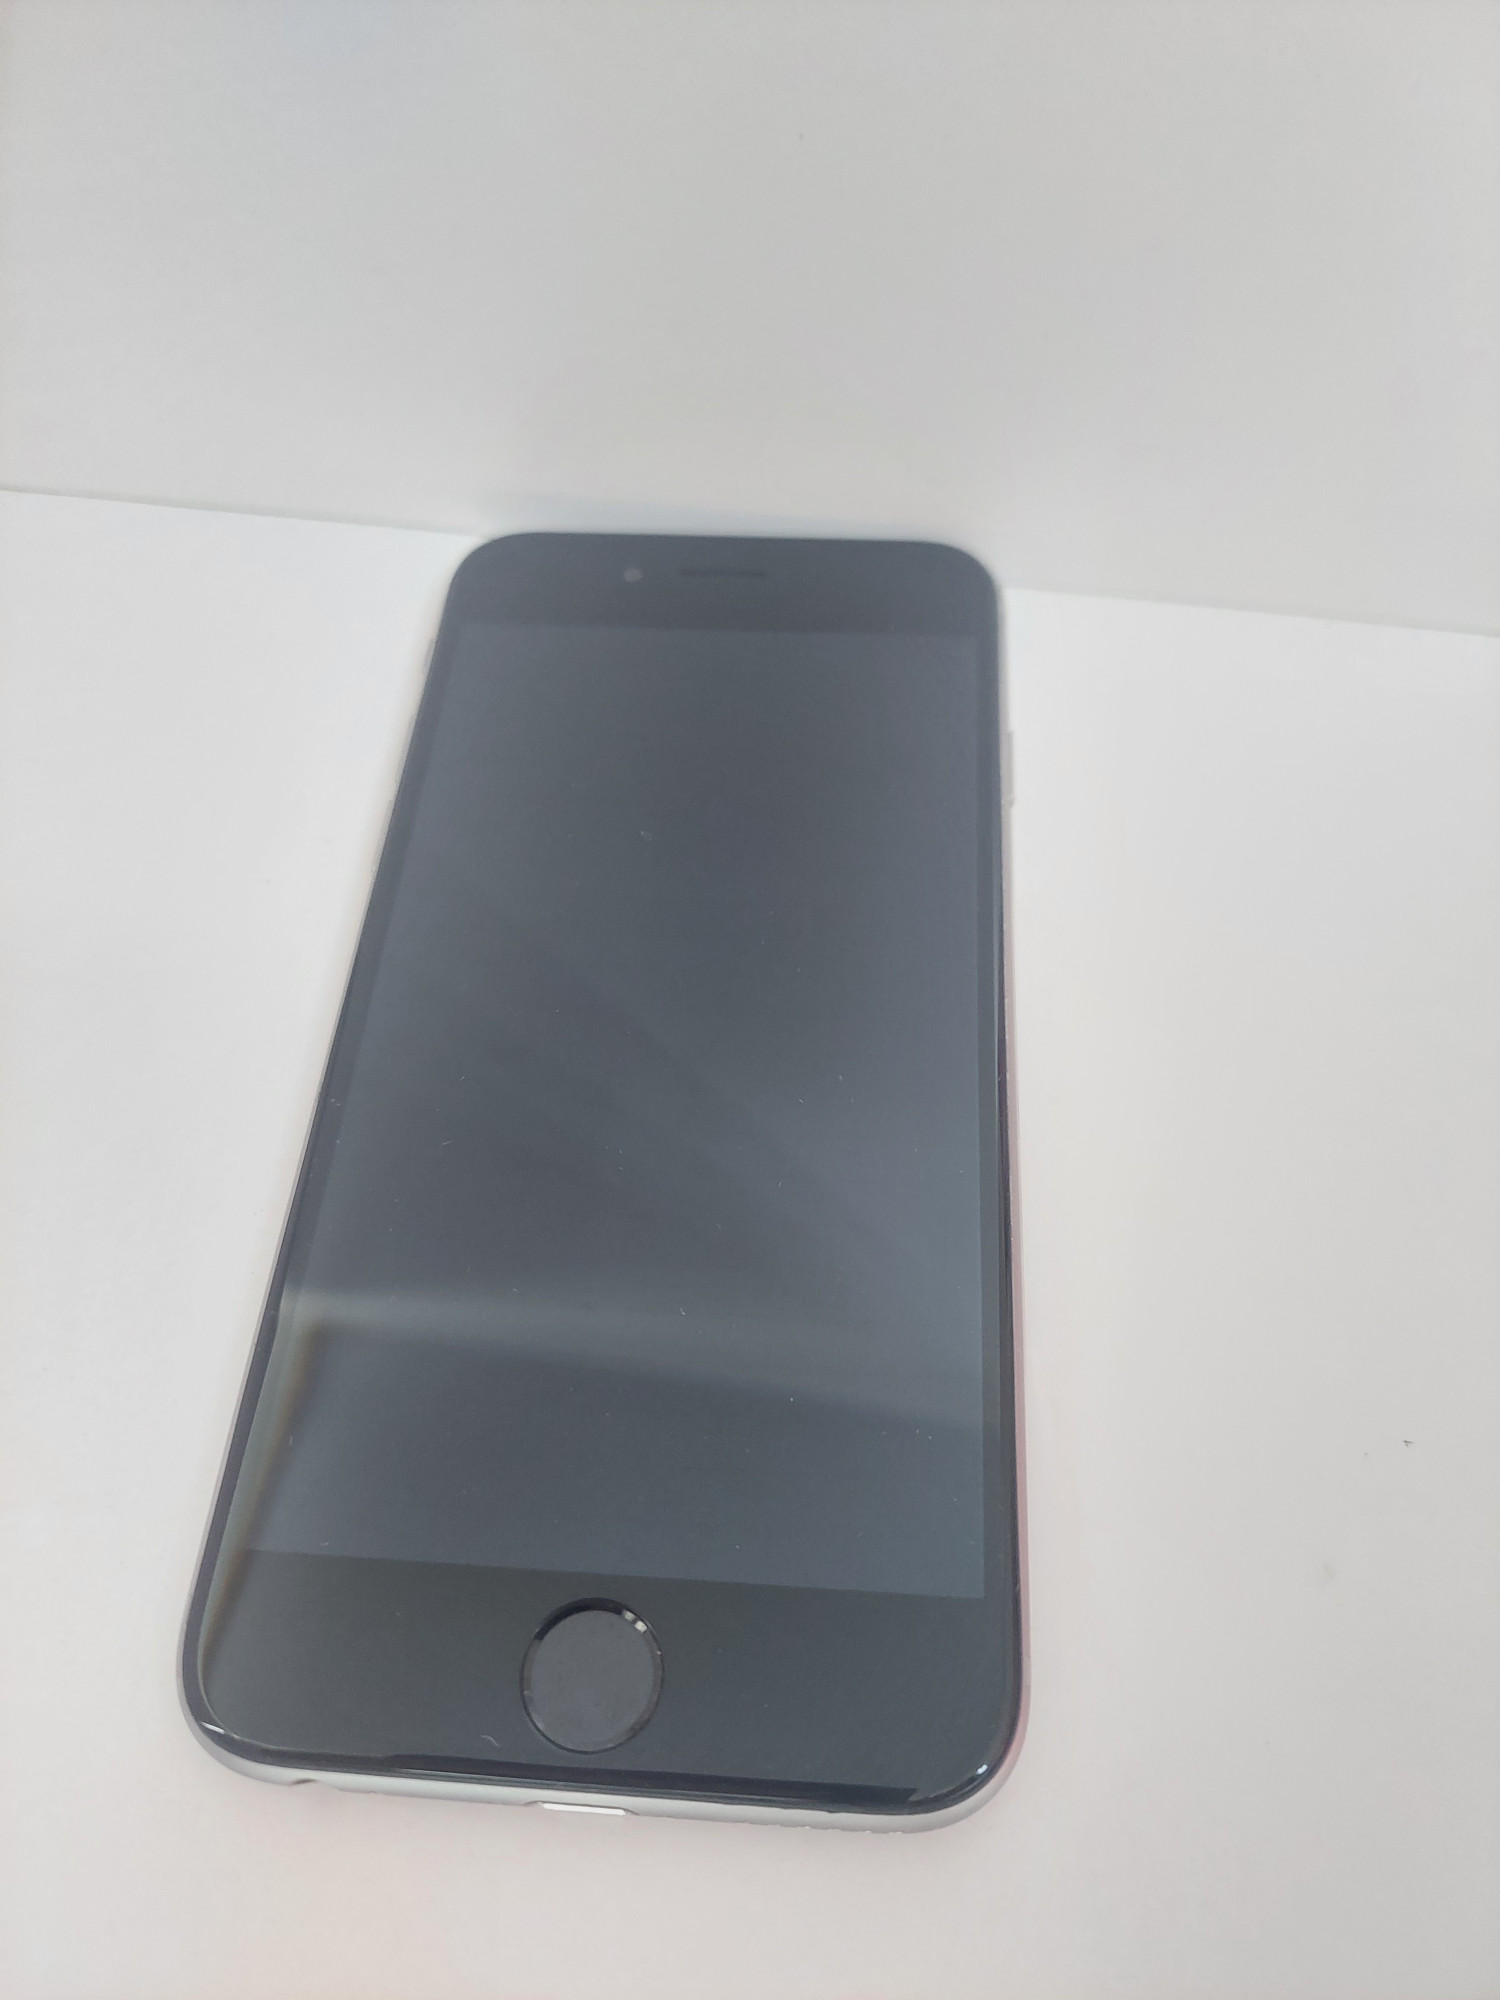 Apple iPhone 6 32Gb Silver 1